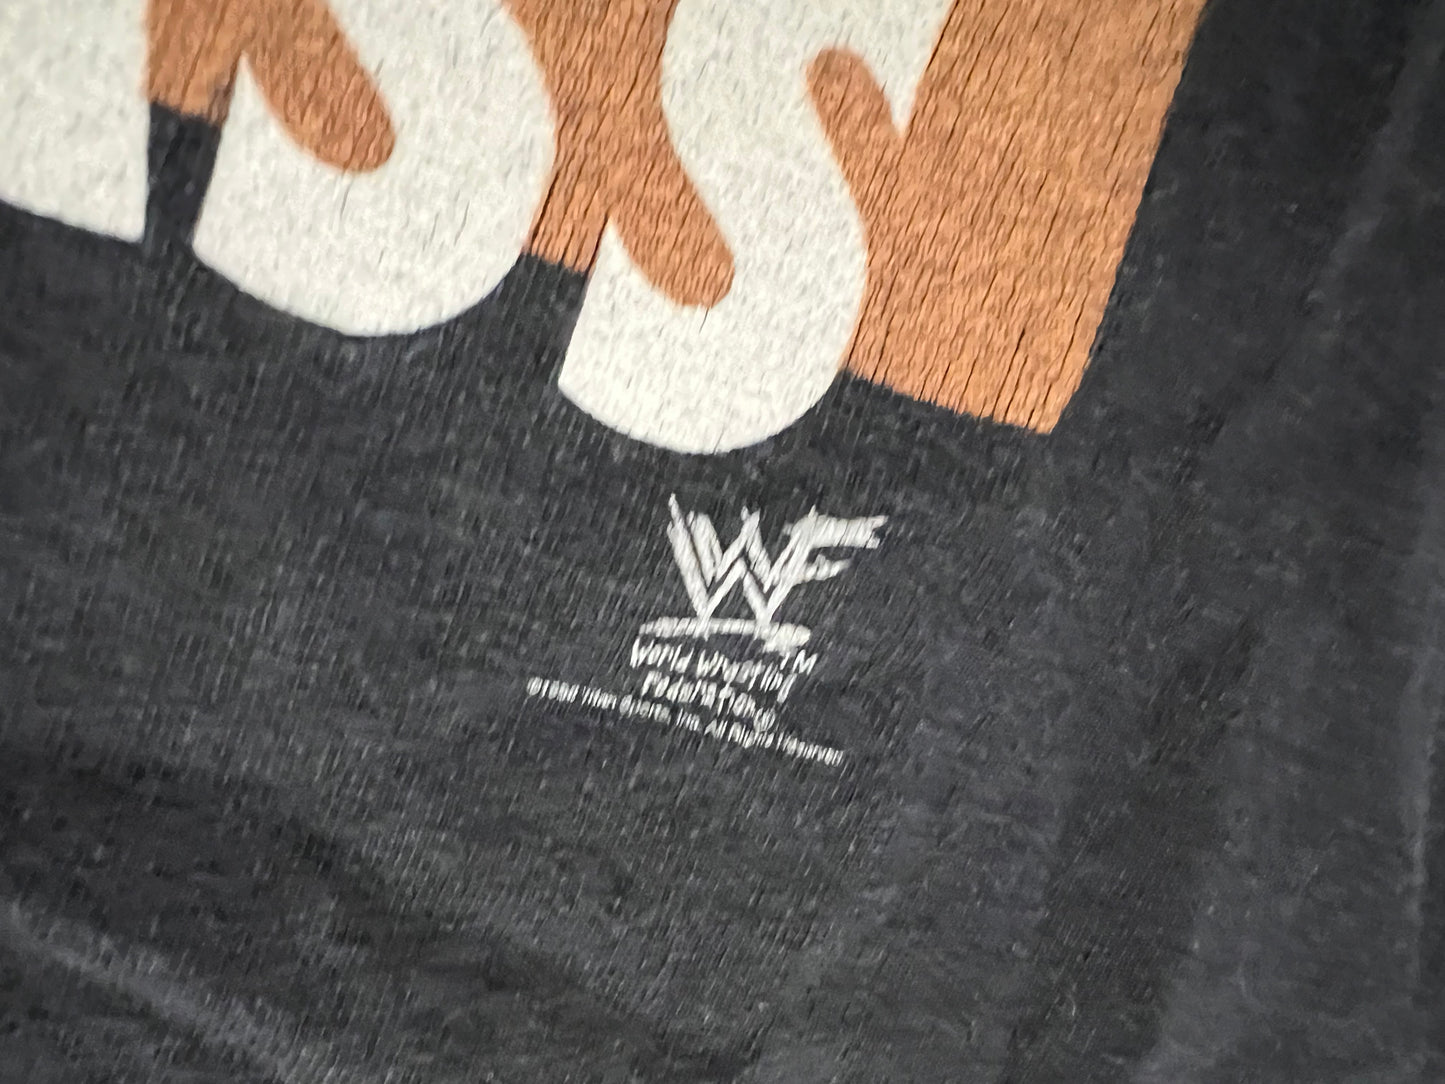 1998 WWF “Stone Cold” Steve Austin “100% Pure Whoop Ass” shirt